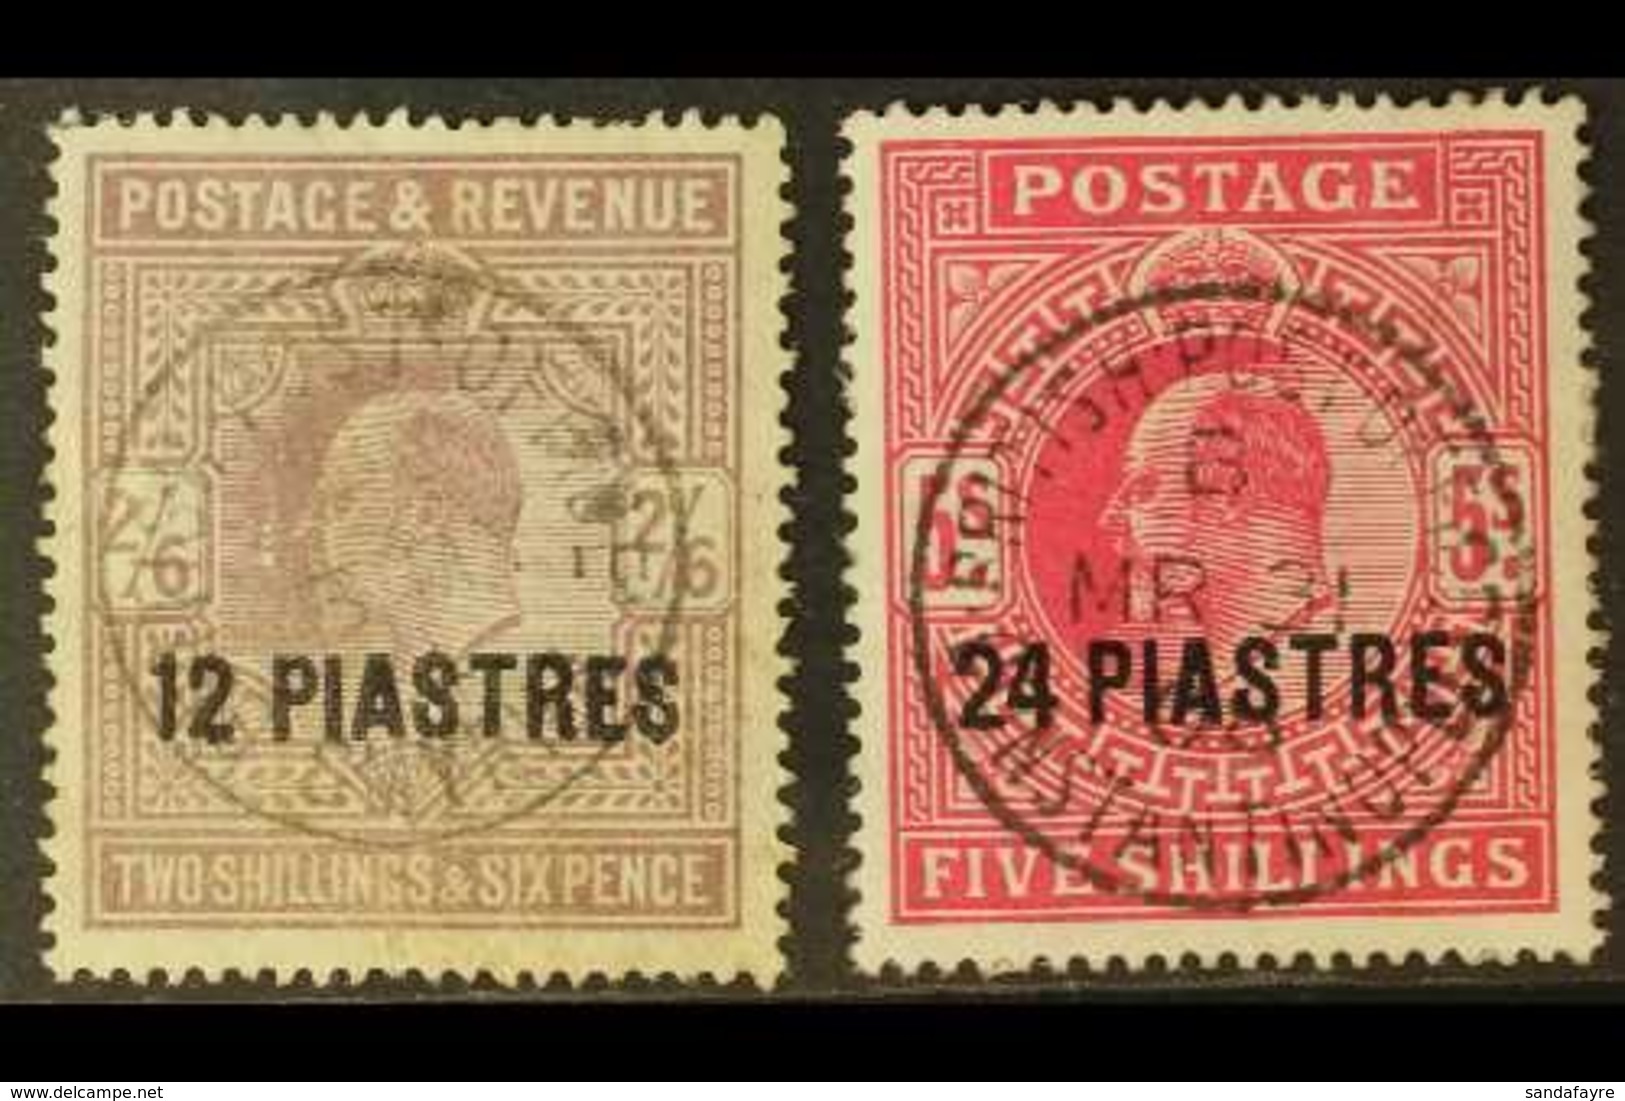 1902-05 12pi On 2s.6d Lilac, And 24pi On 5s Bright Carmine, SG 11/12, Fine Full Smyrna Or Constantinople Cds's. (2 Stamp - Levant Britannique